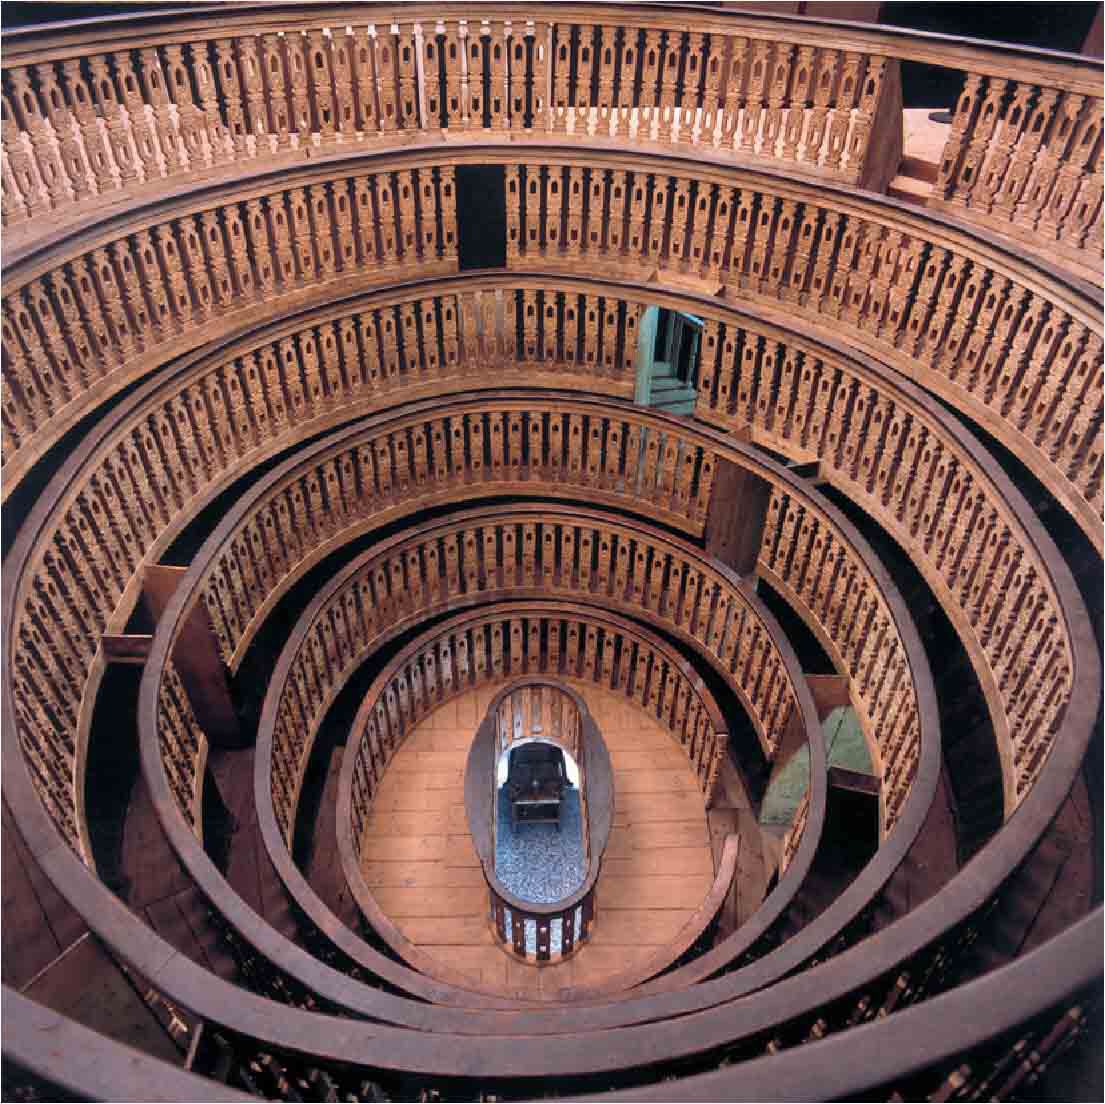 Univ of Padua 1594 anatomy theater